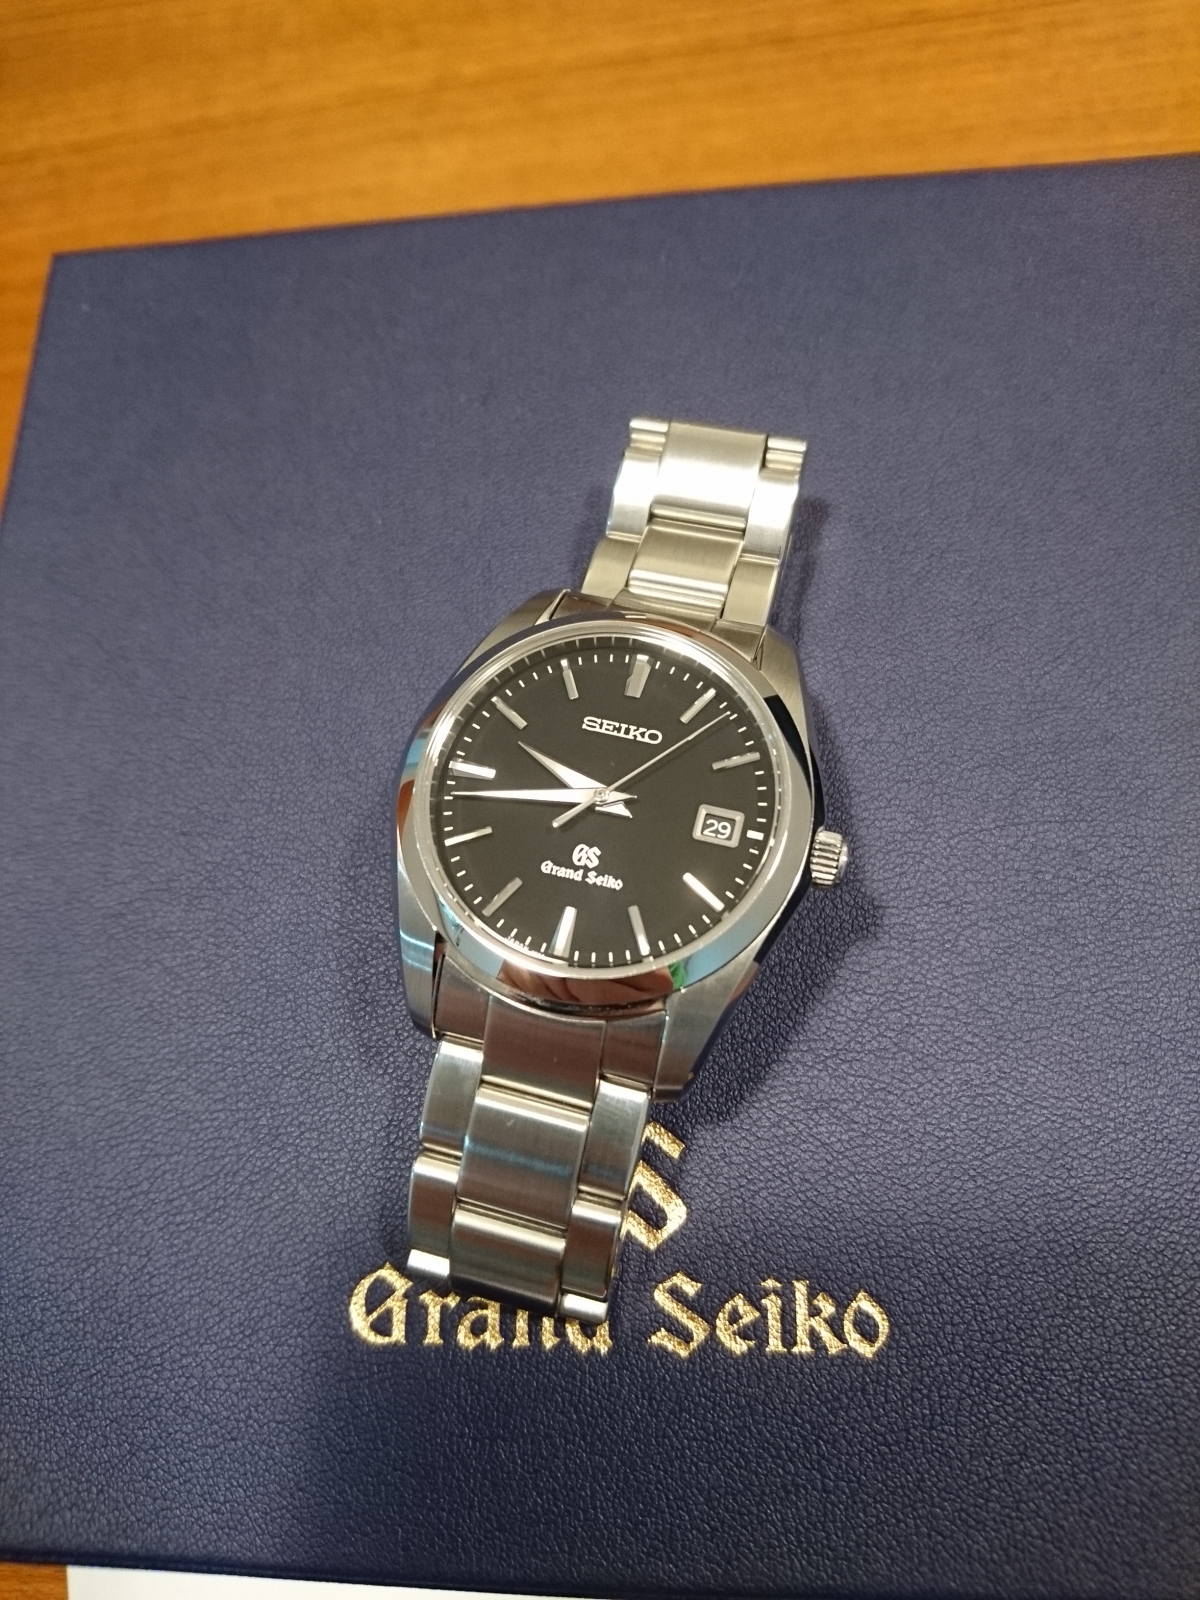 GRAND SEIKO(SBGX061)コンプリートサービス済み - 時計